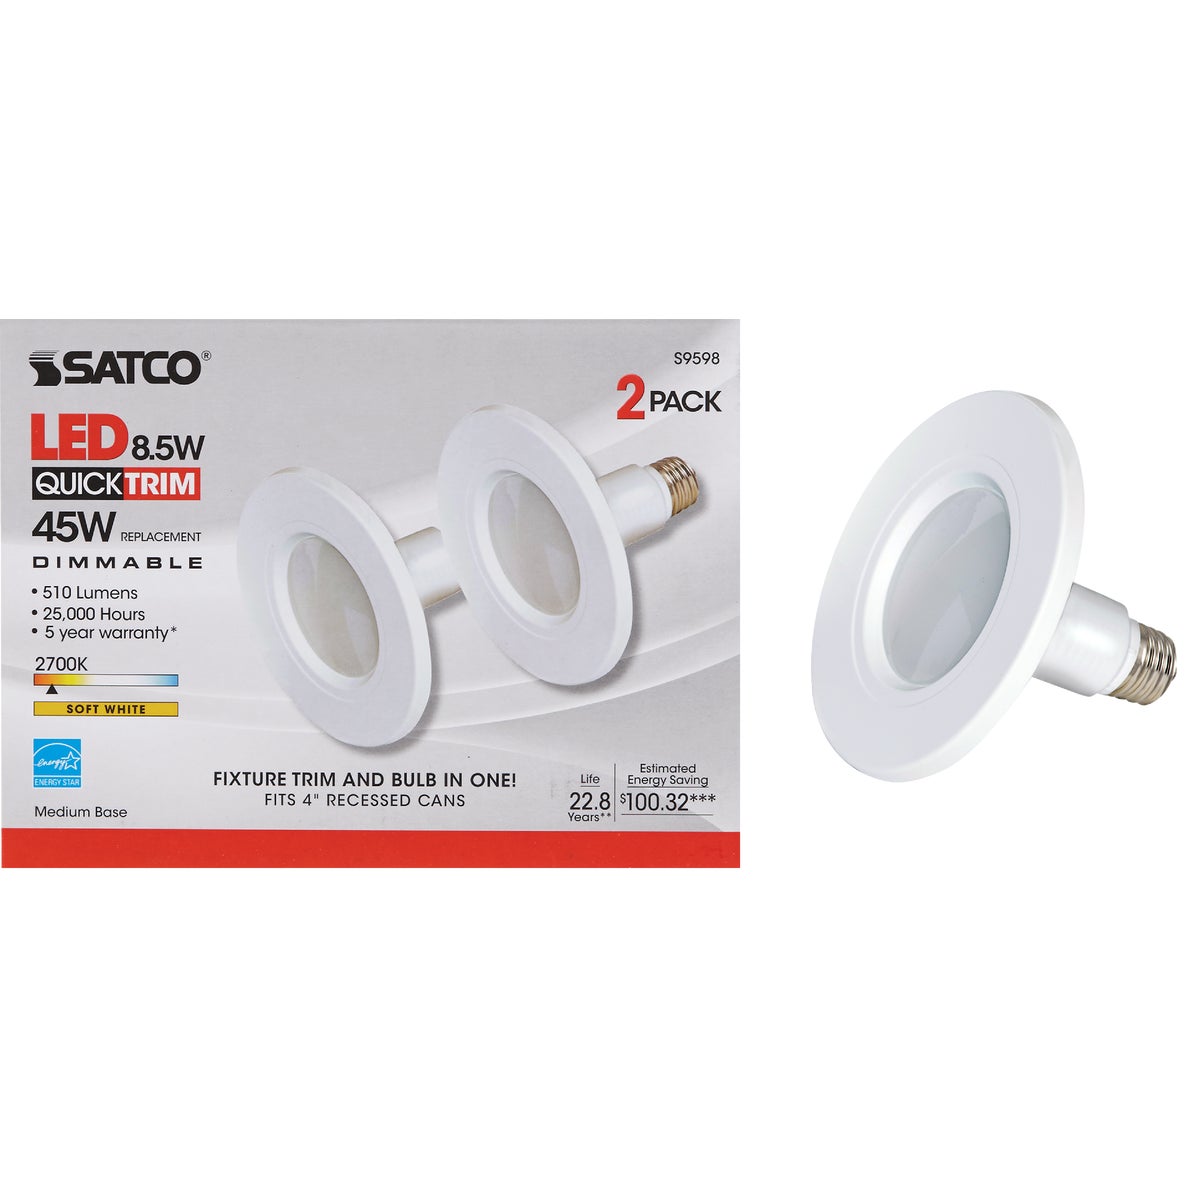 Item 501924, Solid State LED (light emitting diode) lighting downlight retrofit kit.